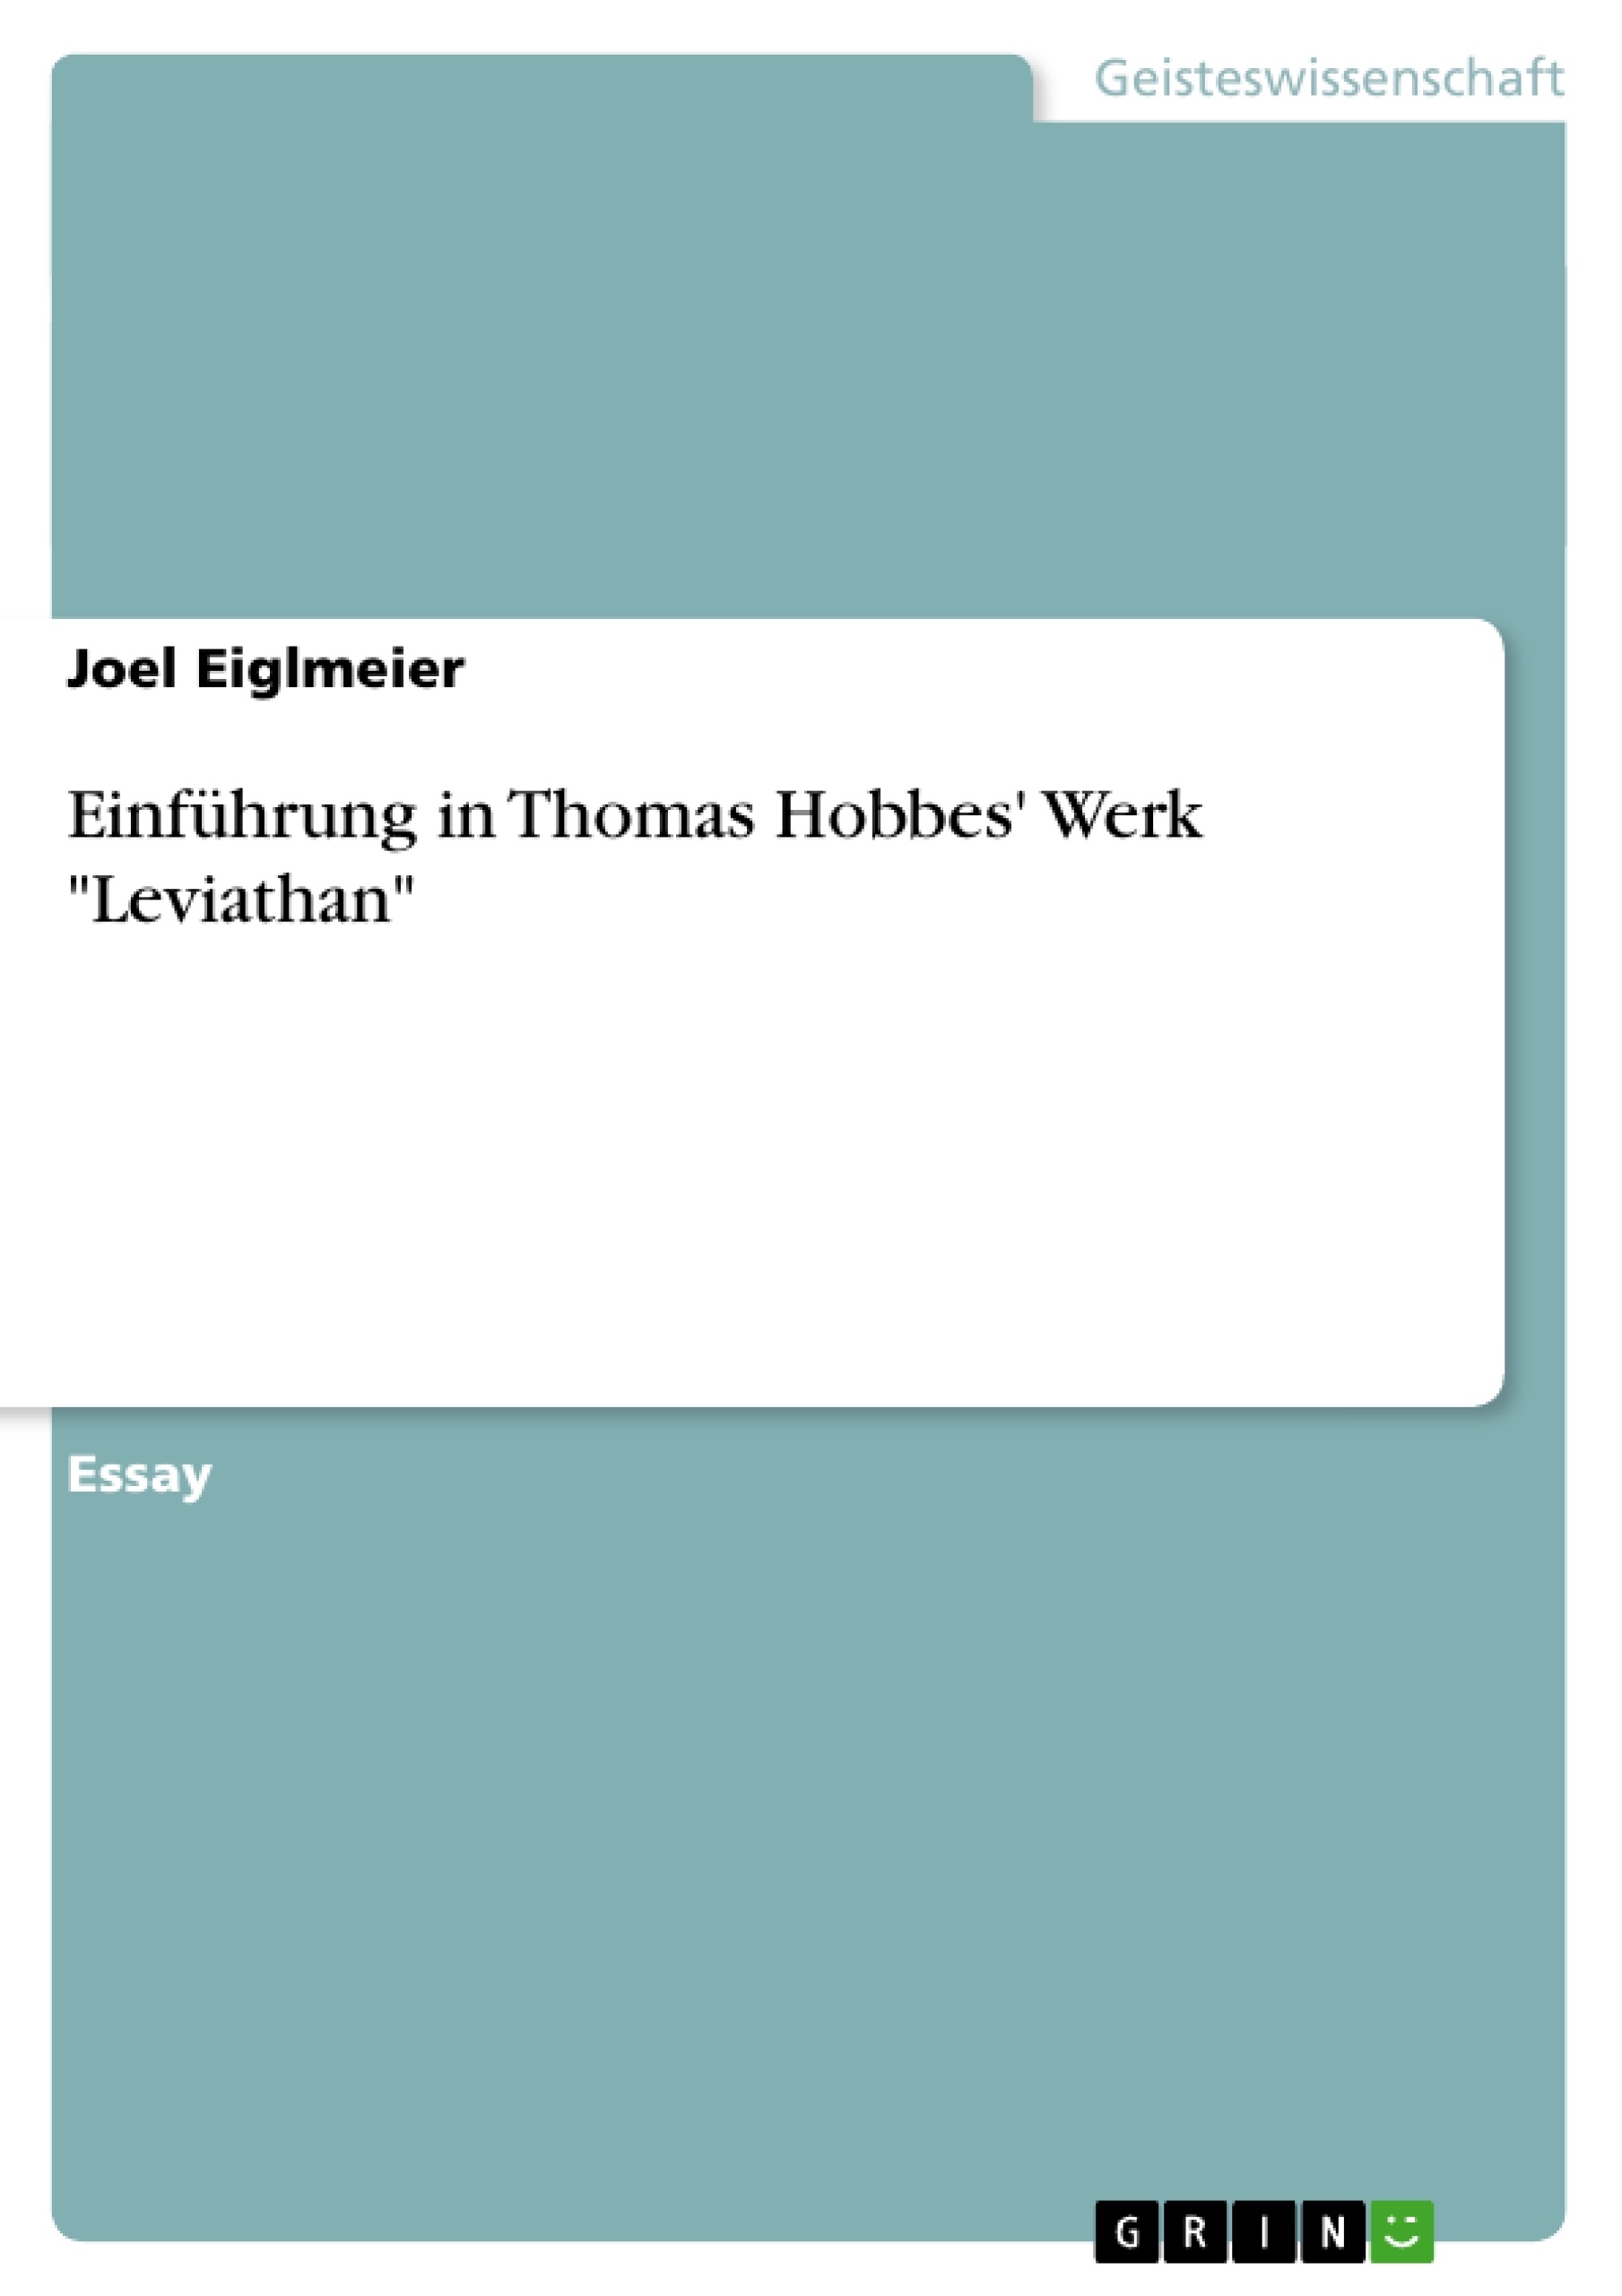 Título: Einführung in Thomas Hobbes' Werk "Leviathan"